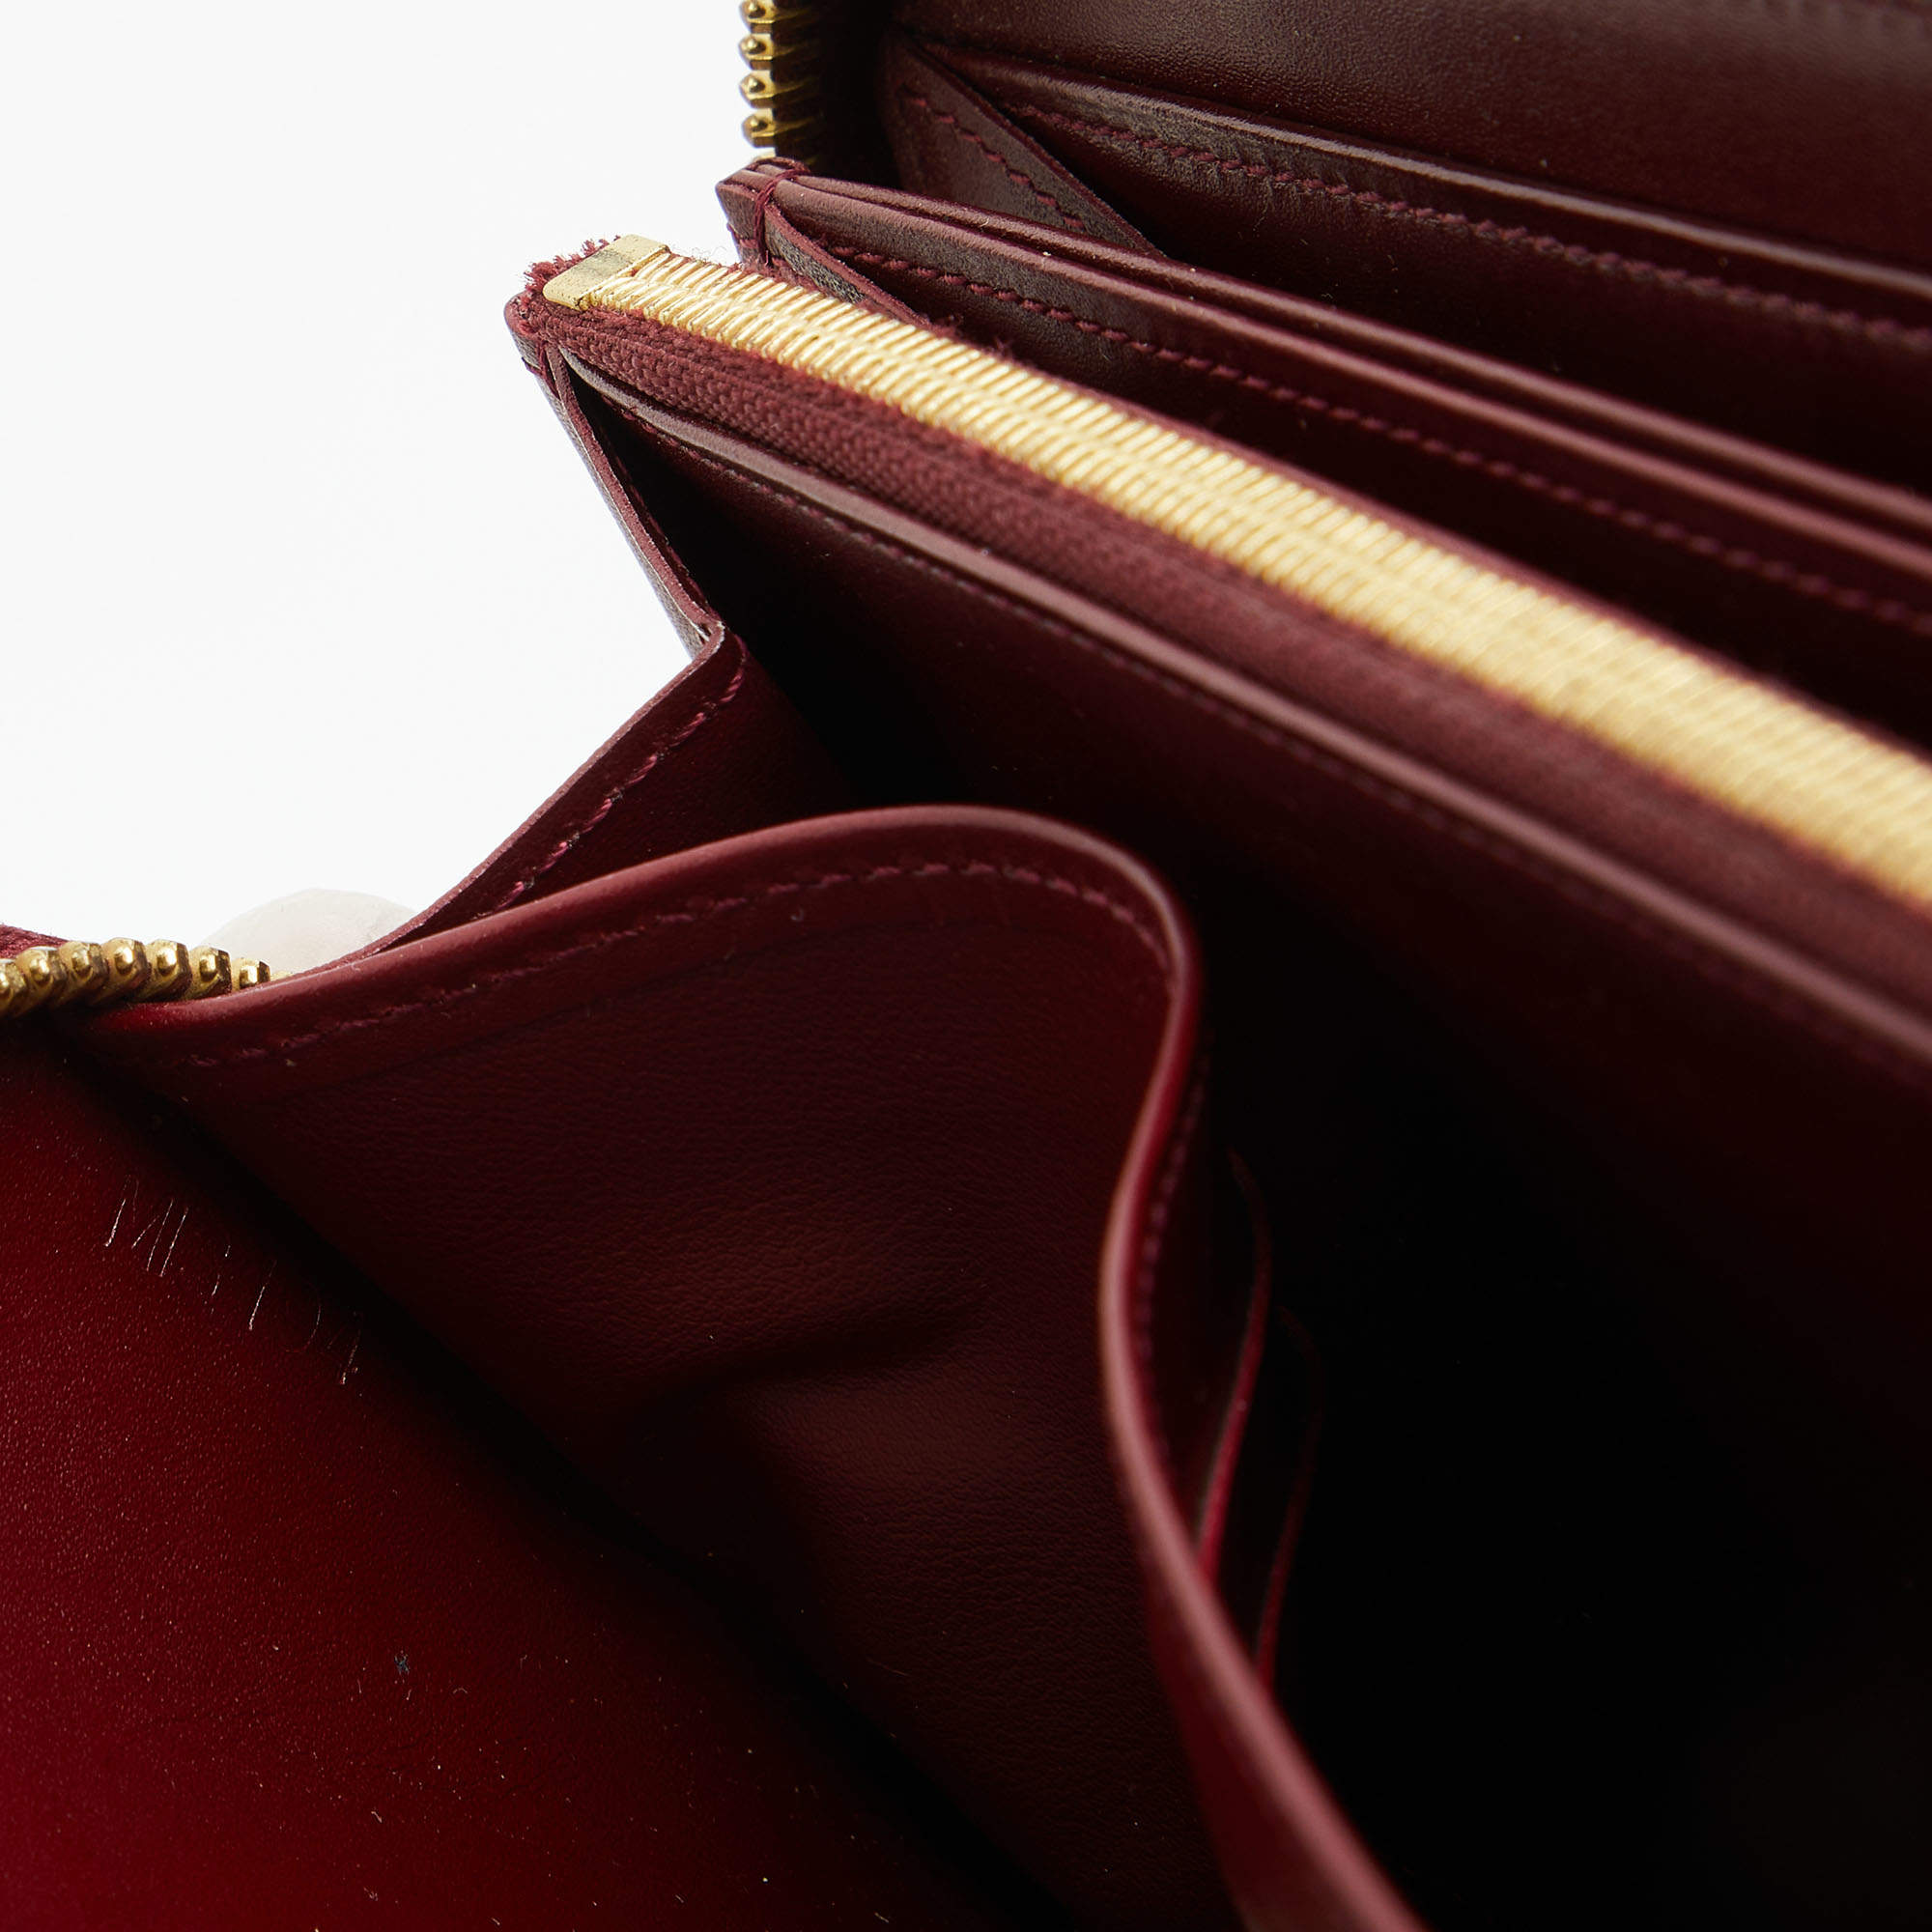 M90020 Louis Vuitton Monogram Vernis Embossed Zippy Wallet Suede Rose